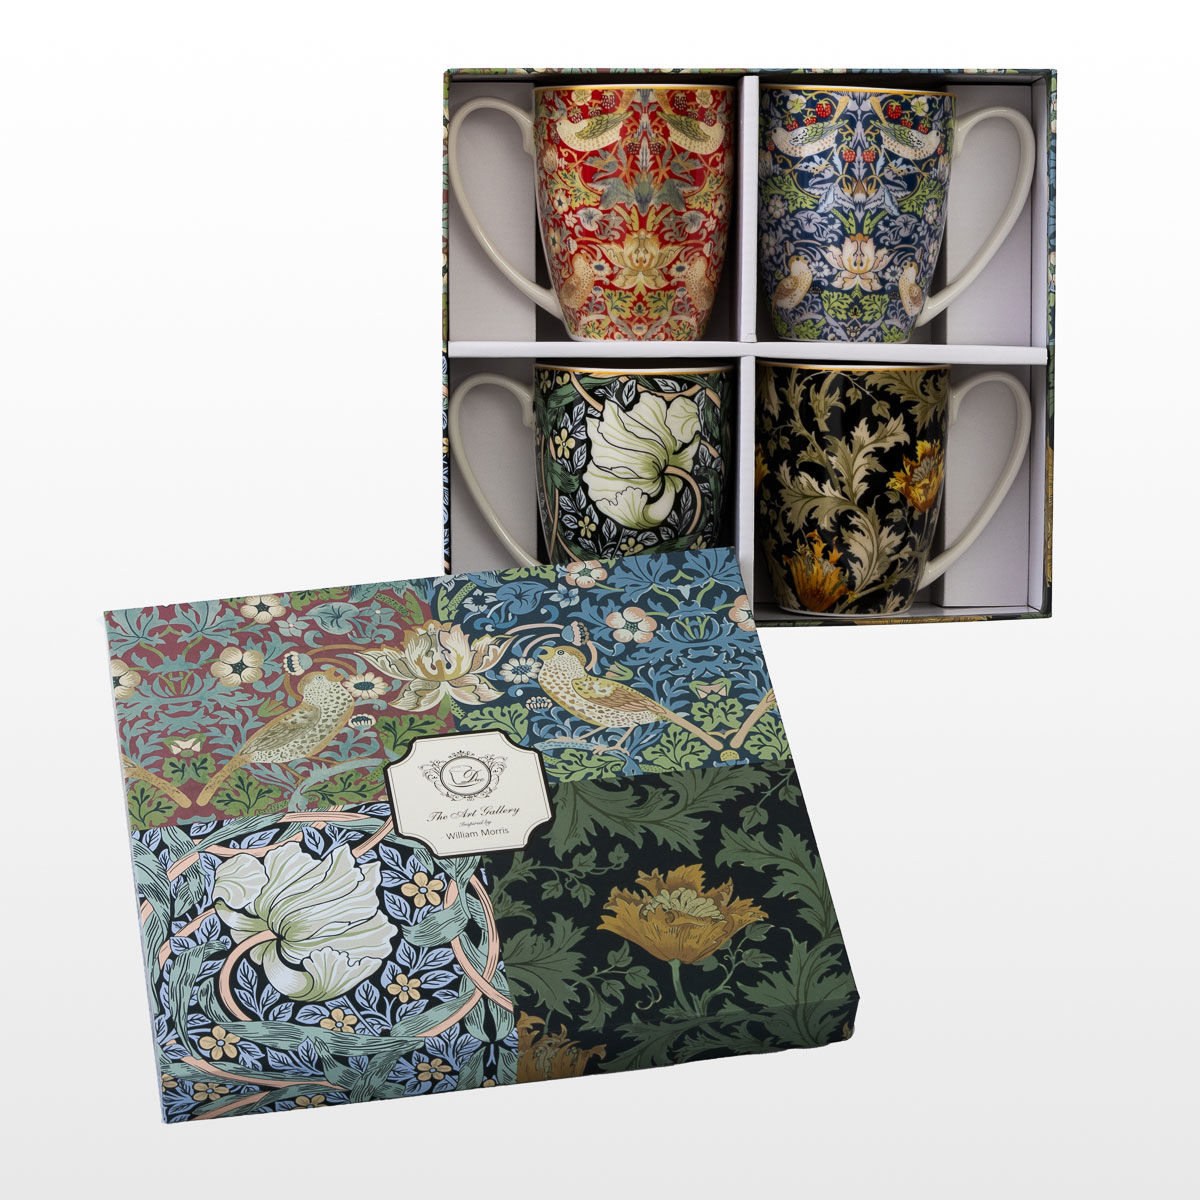 4 William Morris mugs (in a gift box), detail n°2